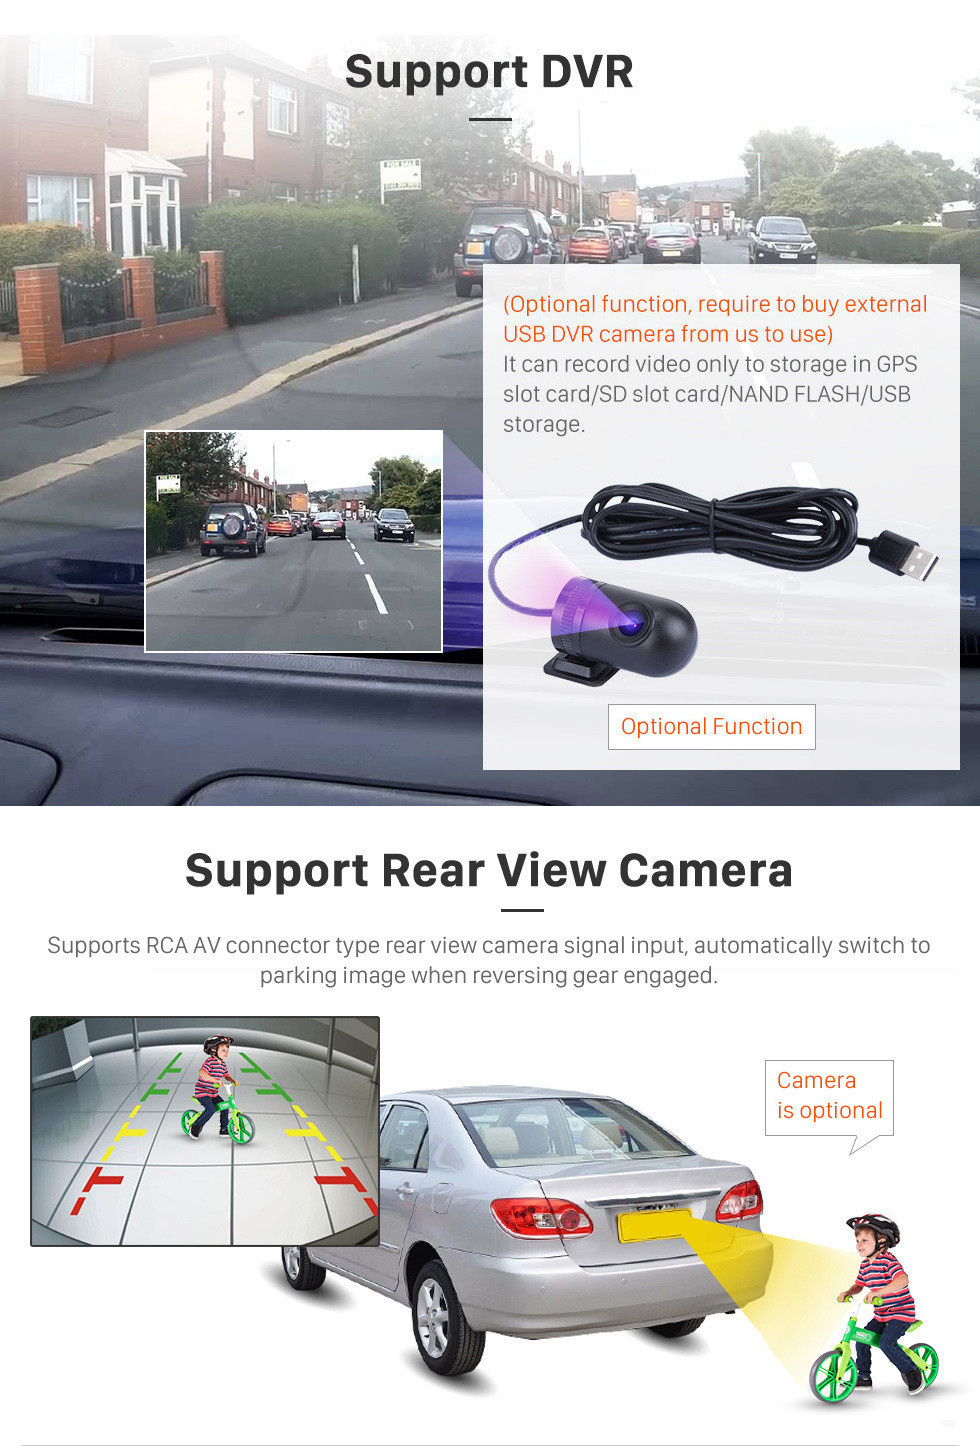 Seicane HD сенсорный экран 2015 Suzuki Wagon Android 11.0 9-дюймовый GPS-навигация Радио Bluetooth WIFI USB Поддержка Carplay DAB + TPMS OBD2